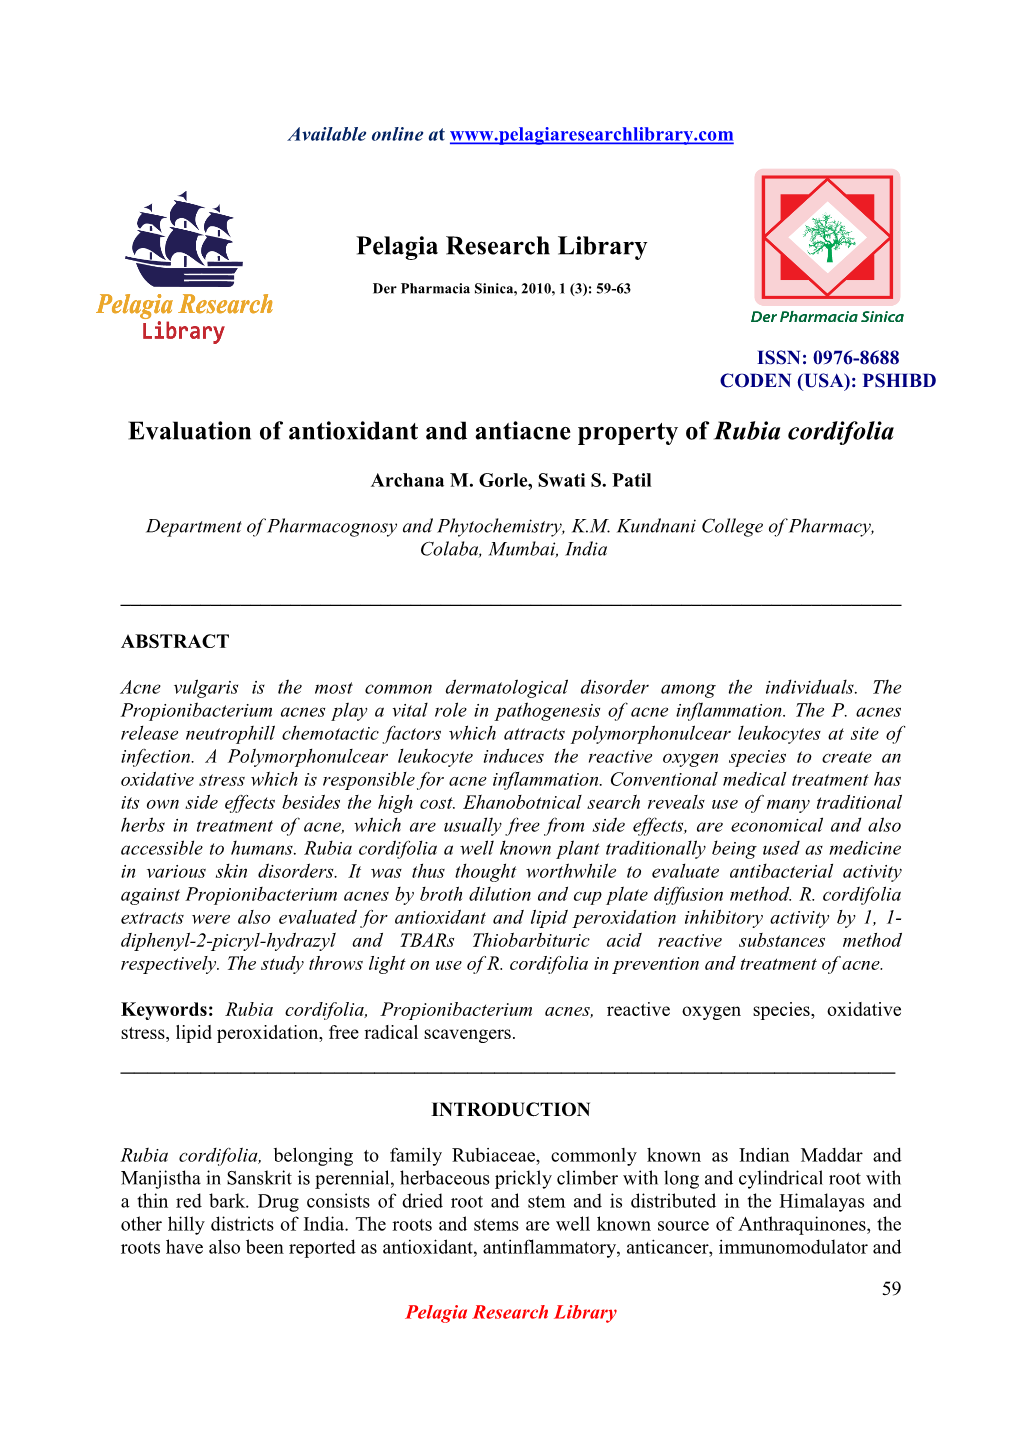 Evaluation of Antioxidant and Antiacne Property of Rubia Cordifolia